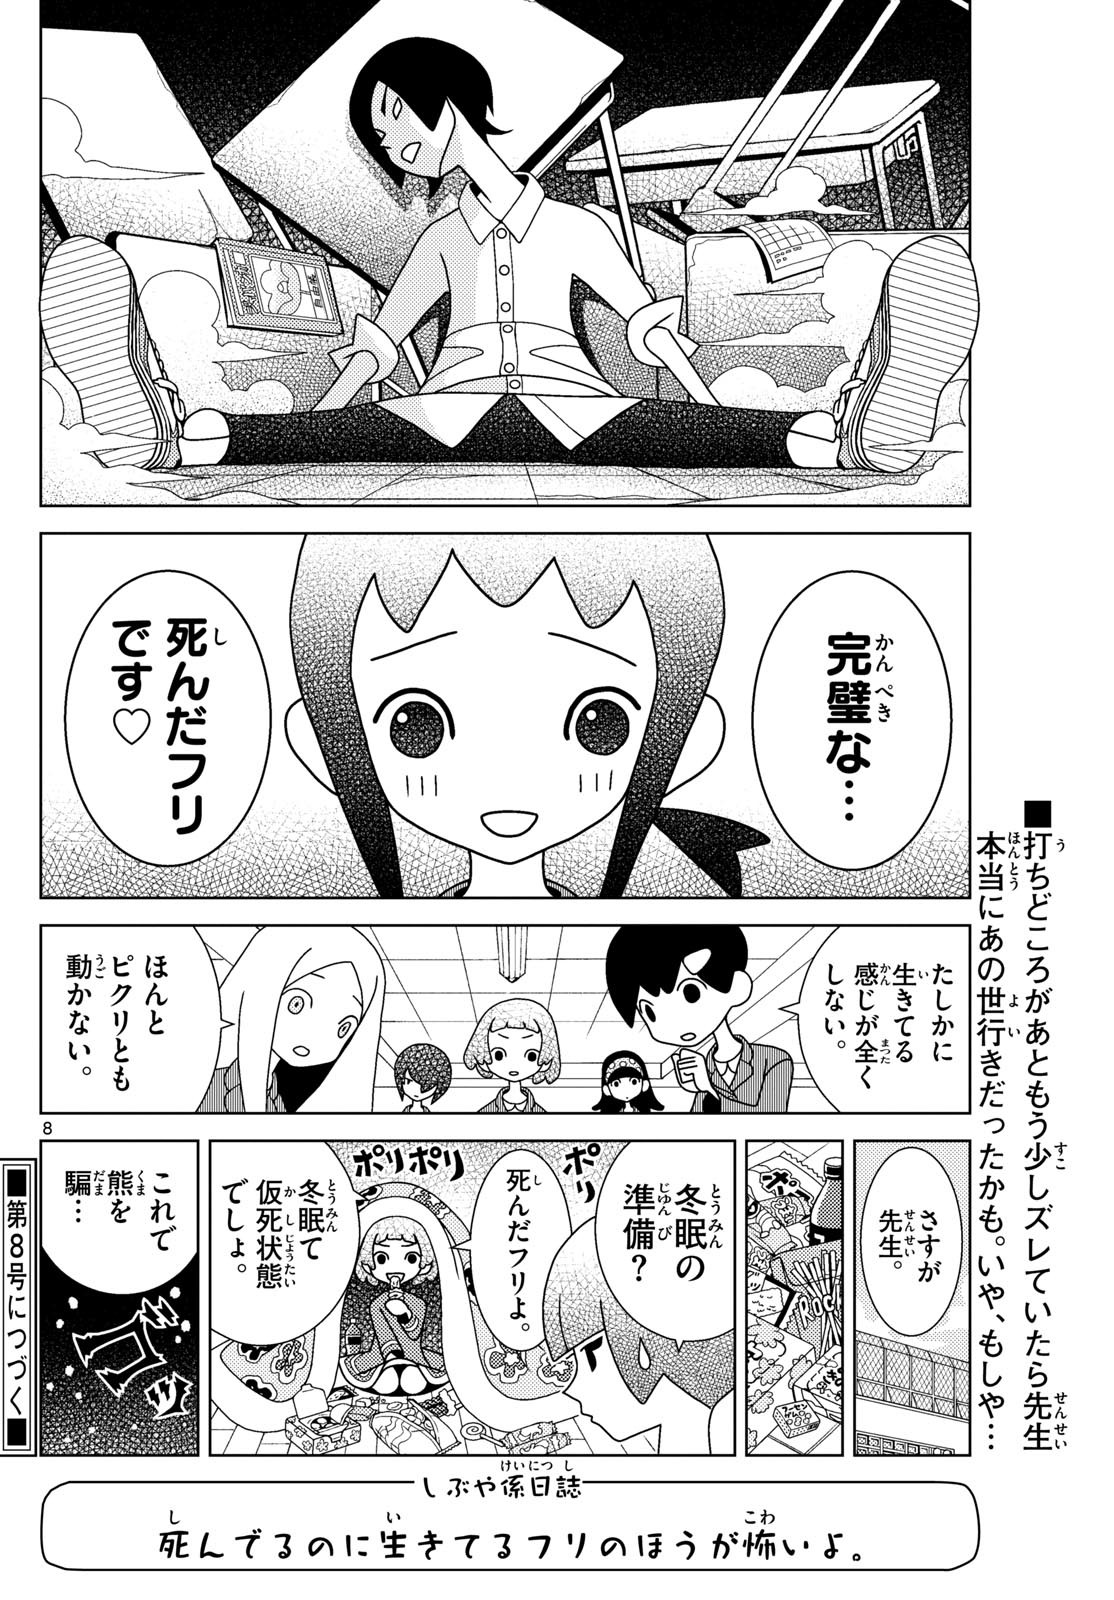 Shibuya Near Family - Chapter 082 - Page 8